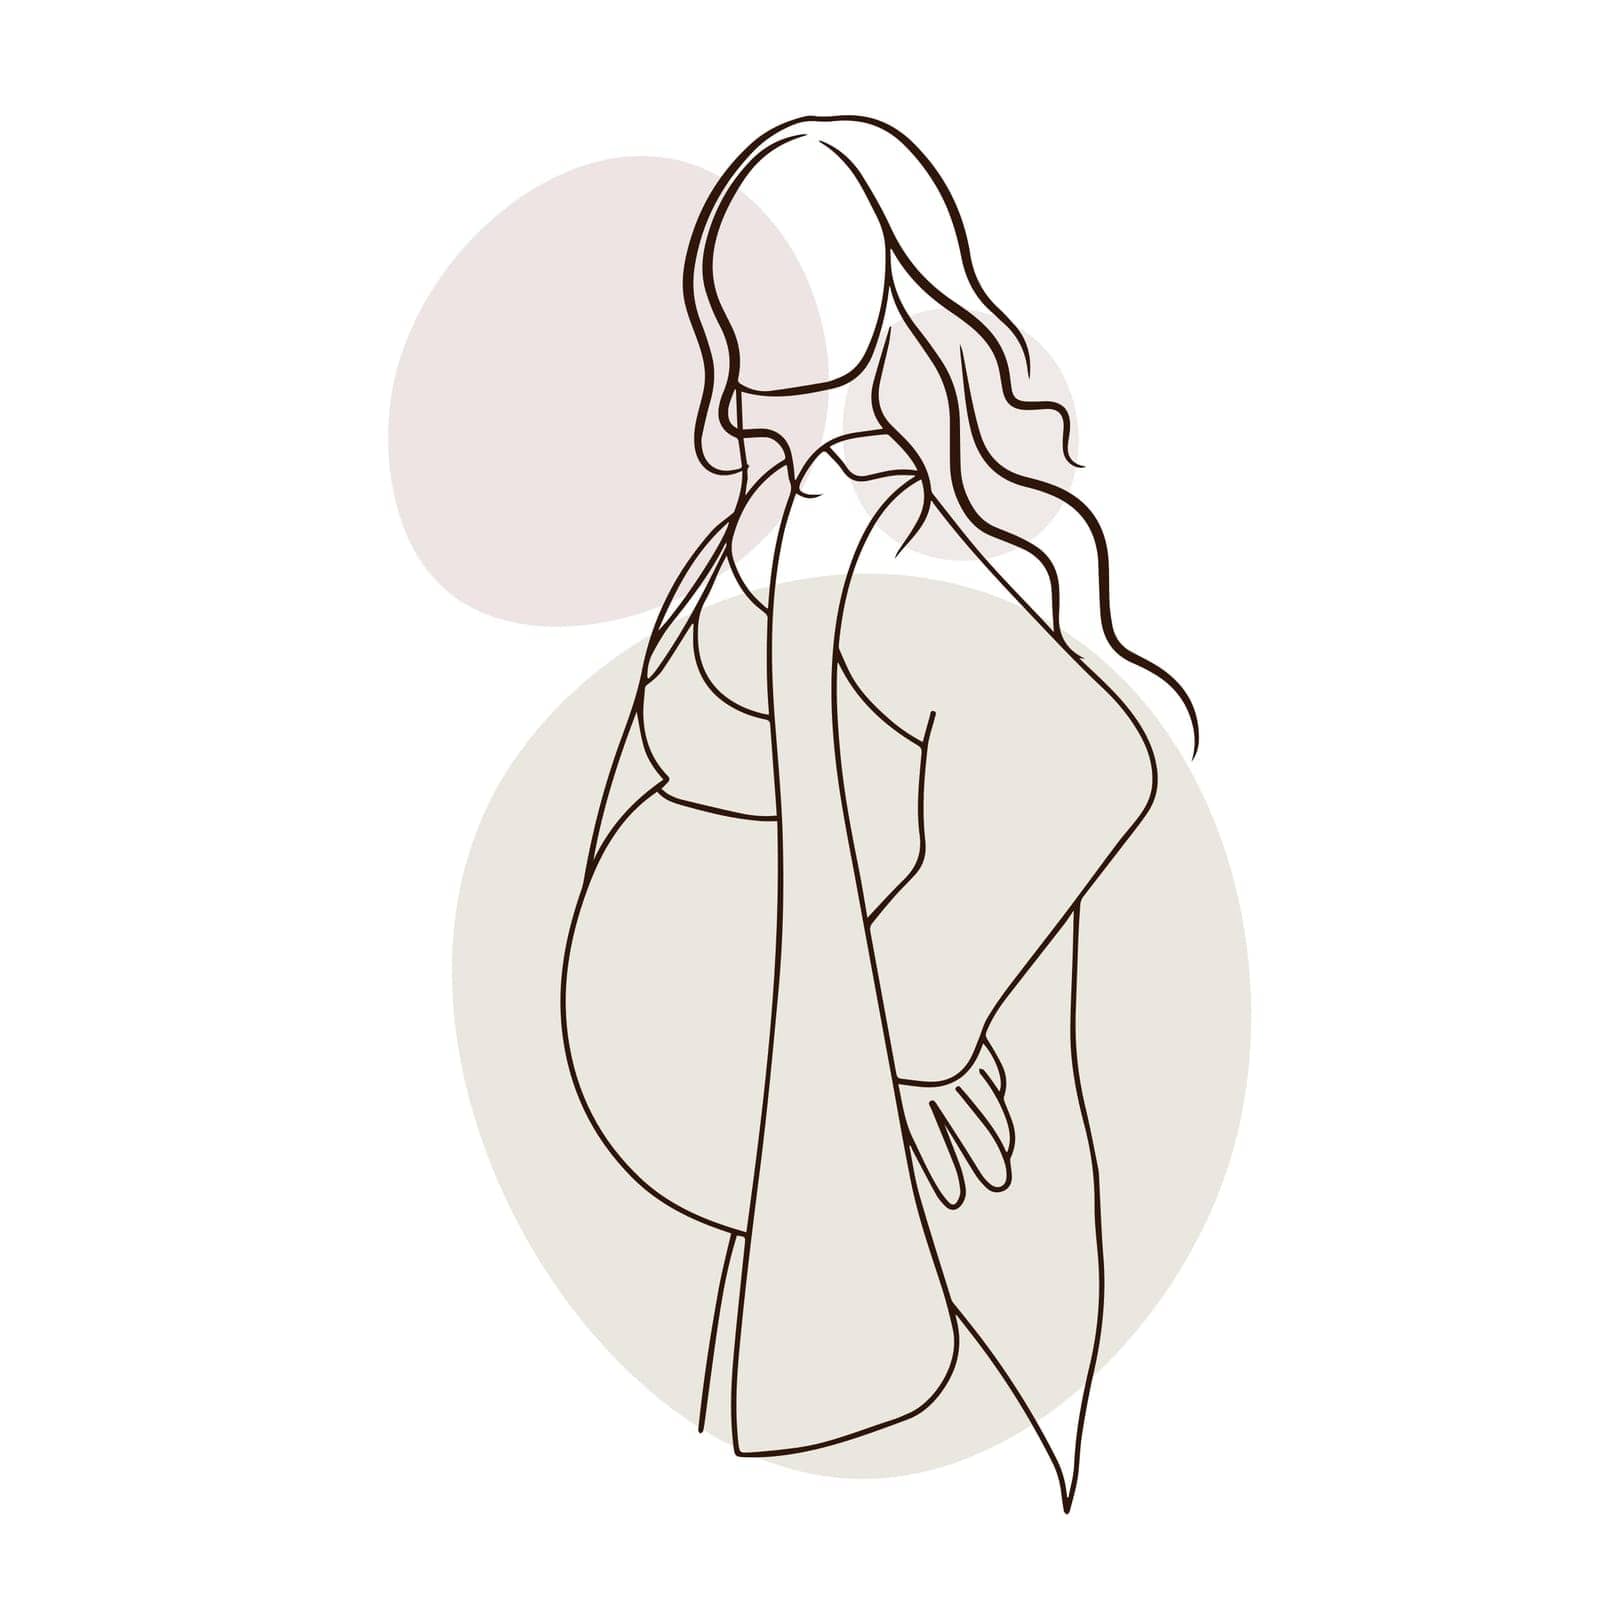 Fashionable pregnant girl, motherhood, big belly, doodle by anjdonets